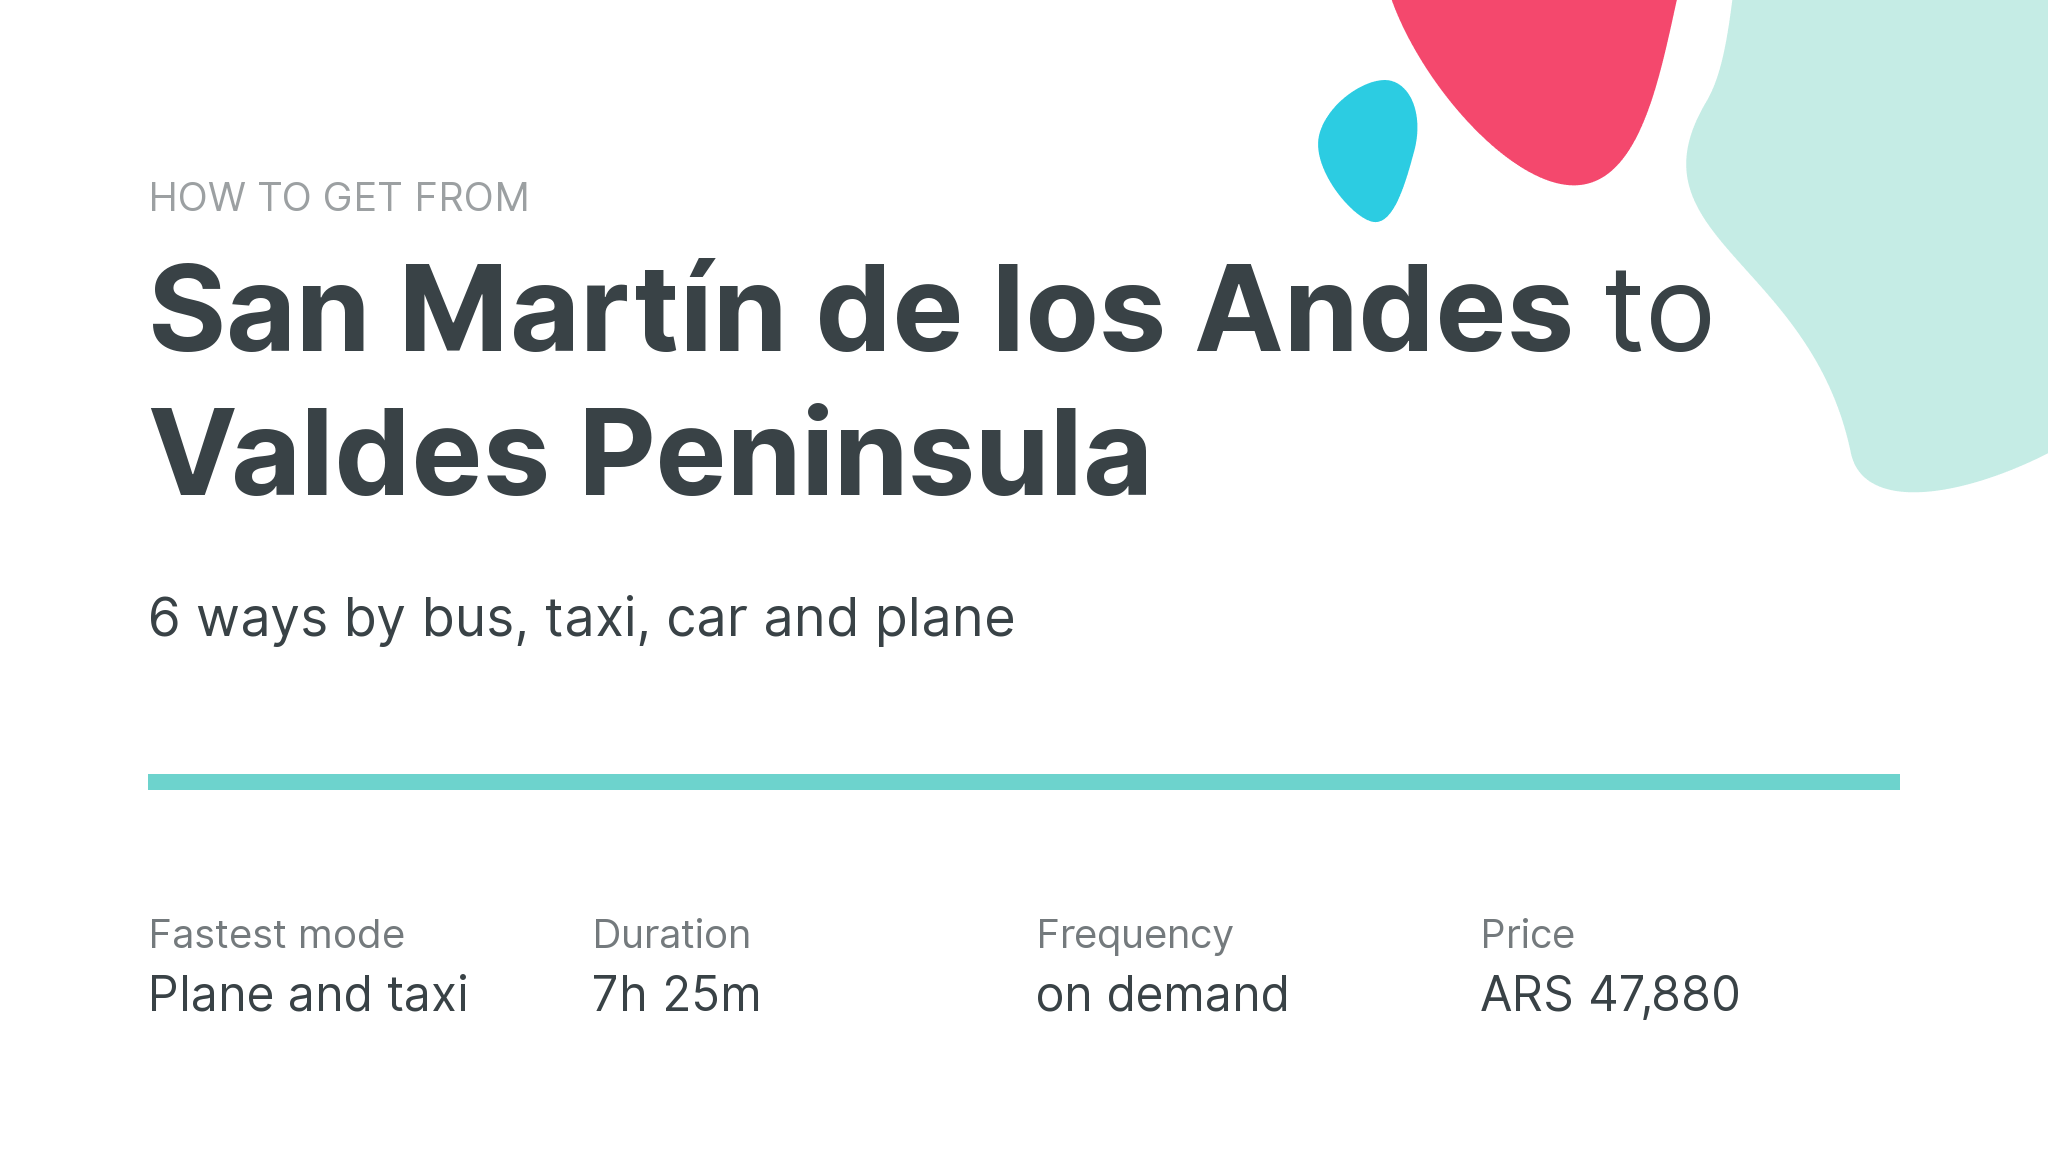 How do I get from San Martín de los Andes to Valdes Peninsula